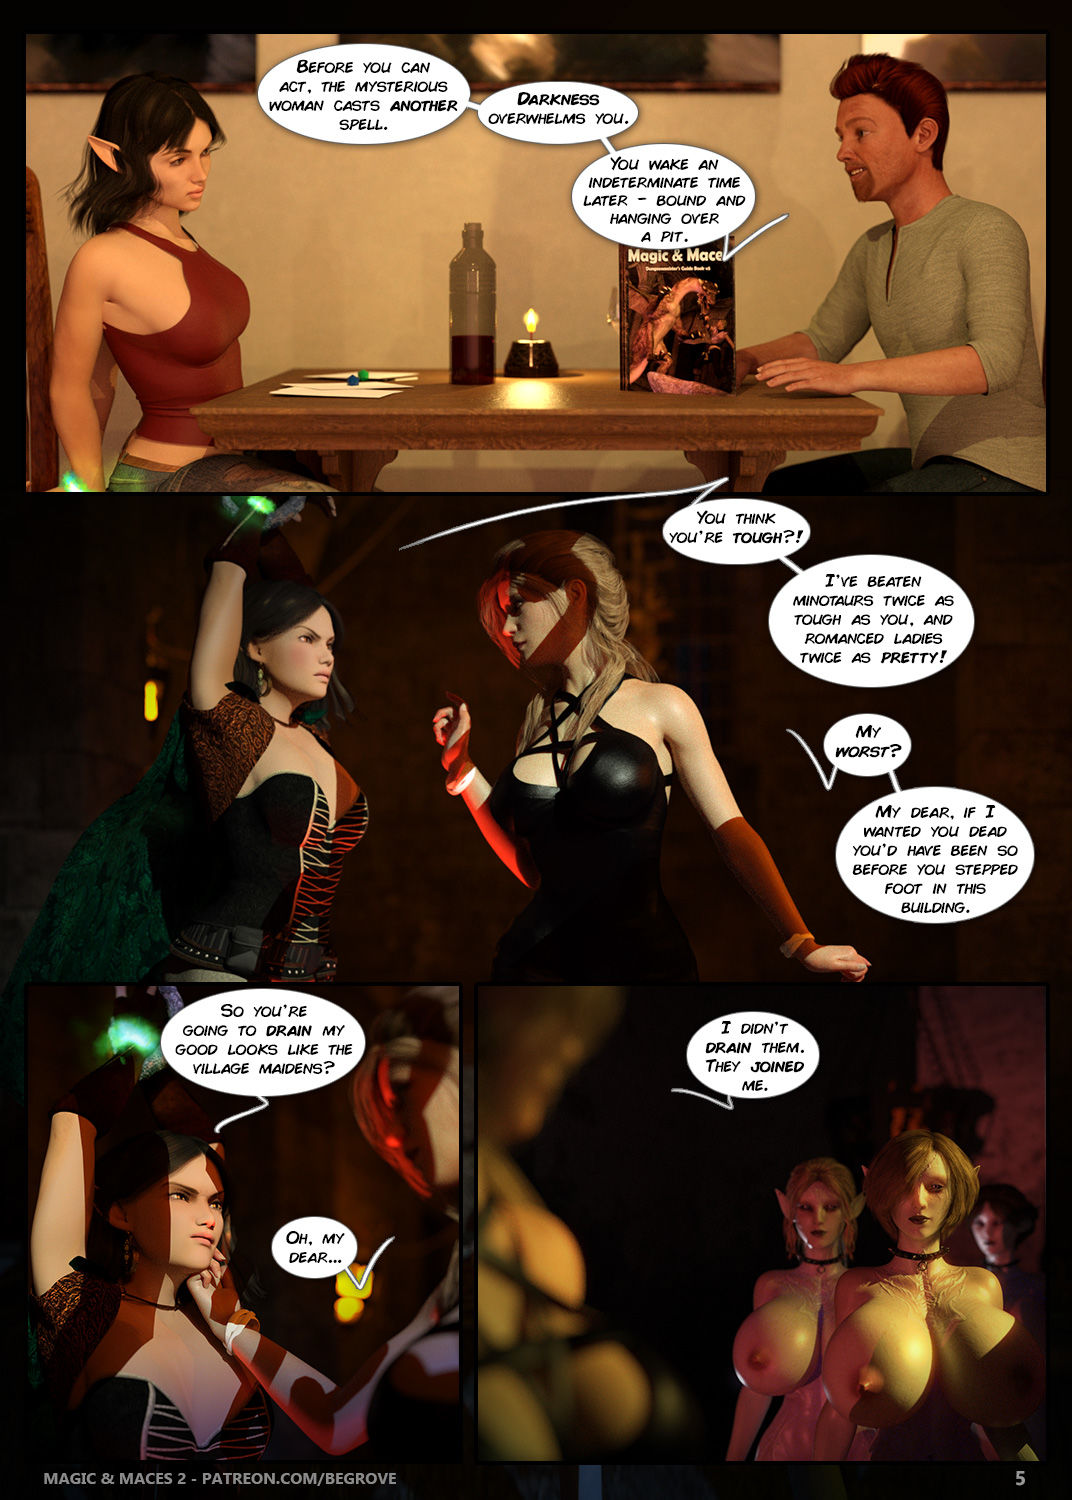 Magic and Maces 2 - Begrove page 5